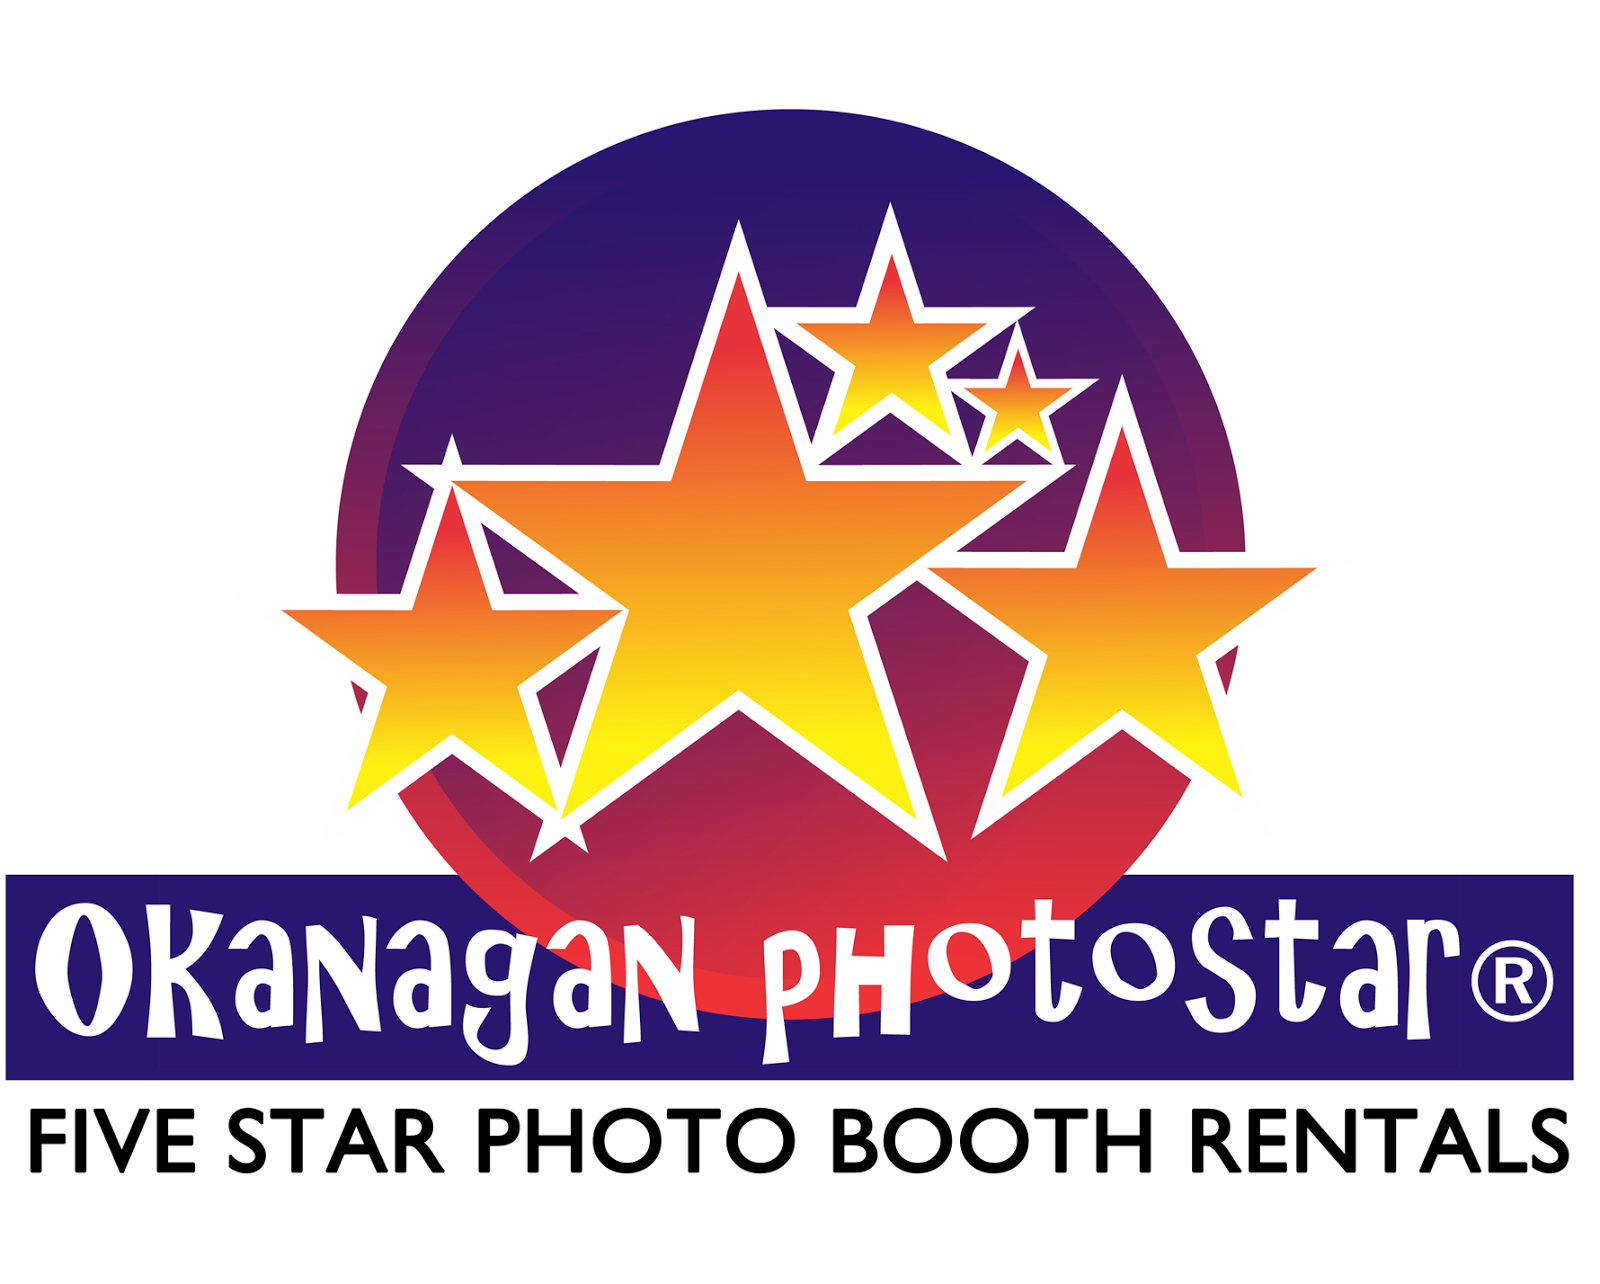 Okanagan PHOTOSTAR® Five Star Photo Booth Rentals